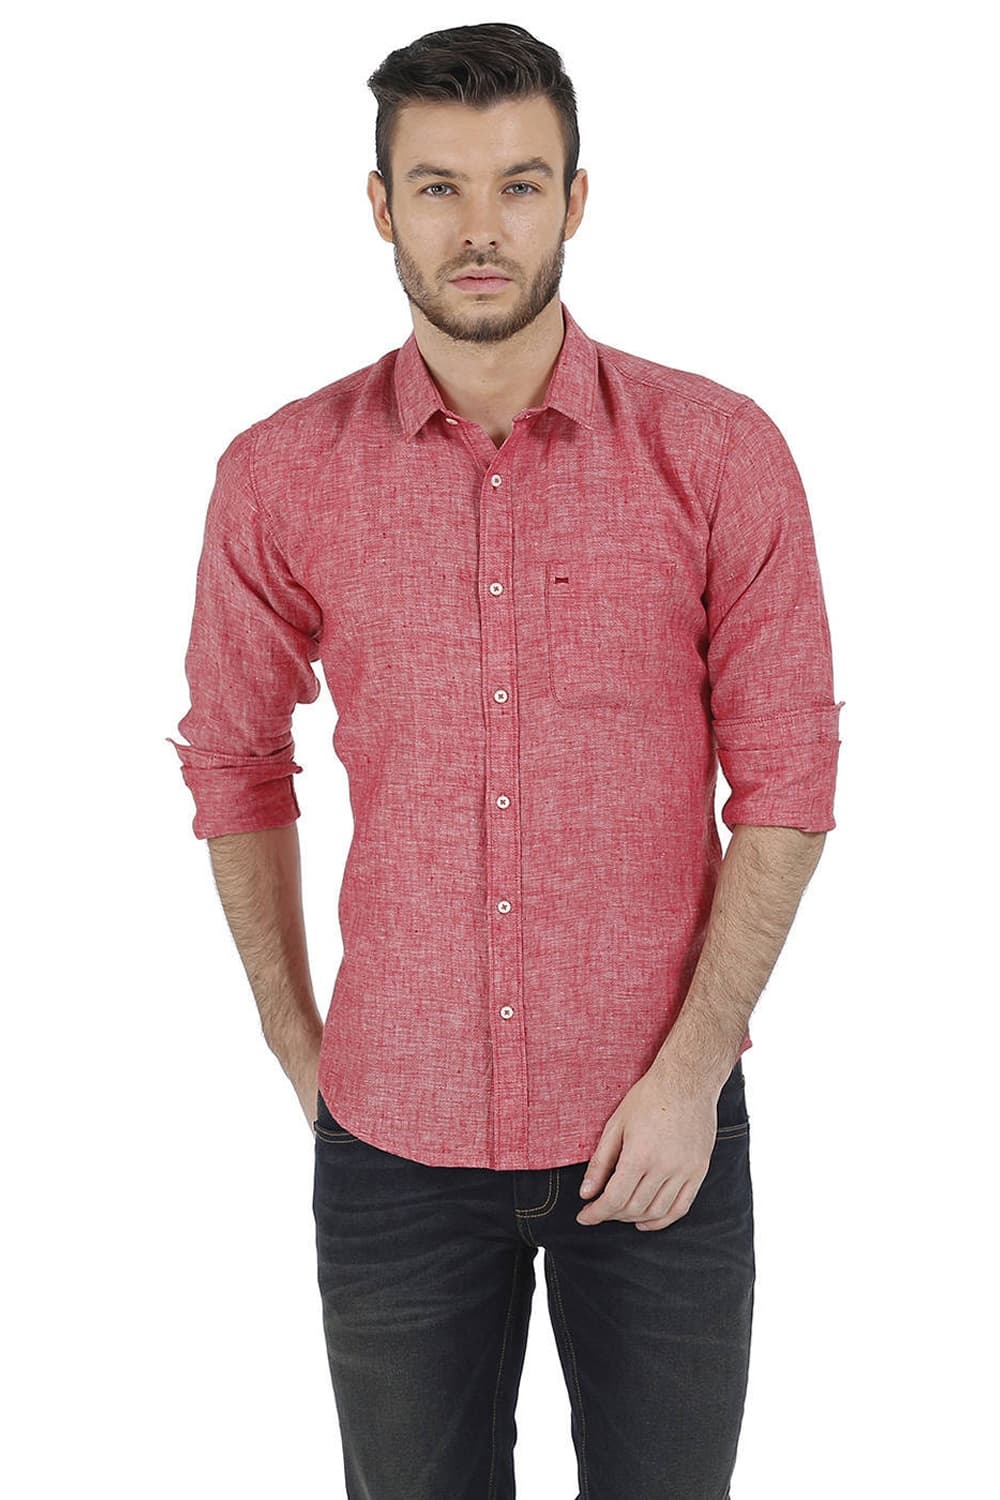 Basics | Basics Slim Fit Red Chambray Linen Shirt